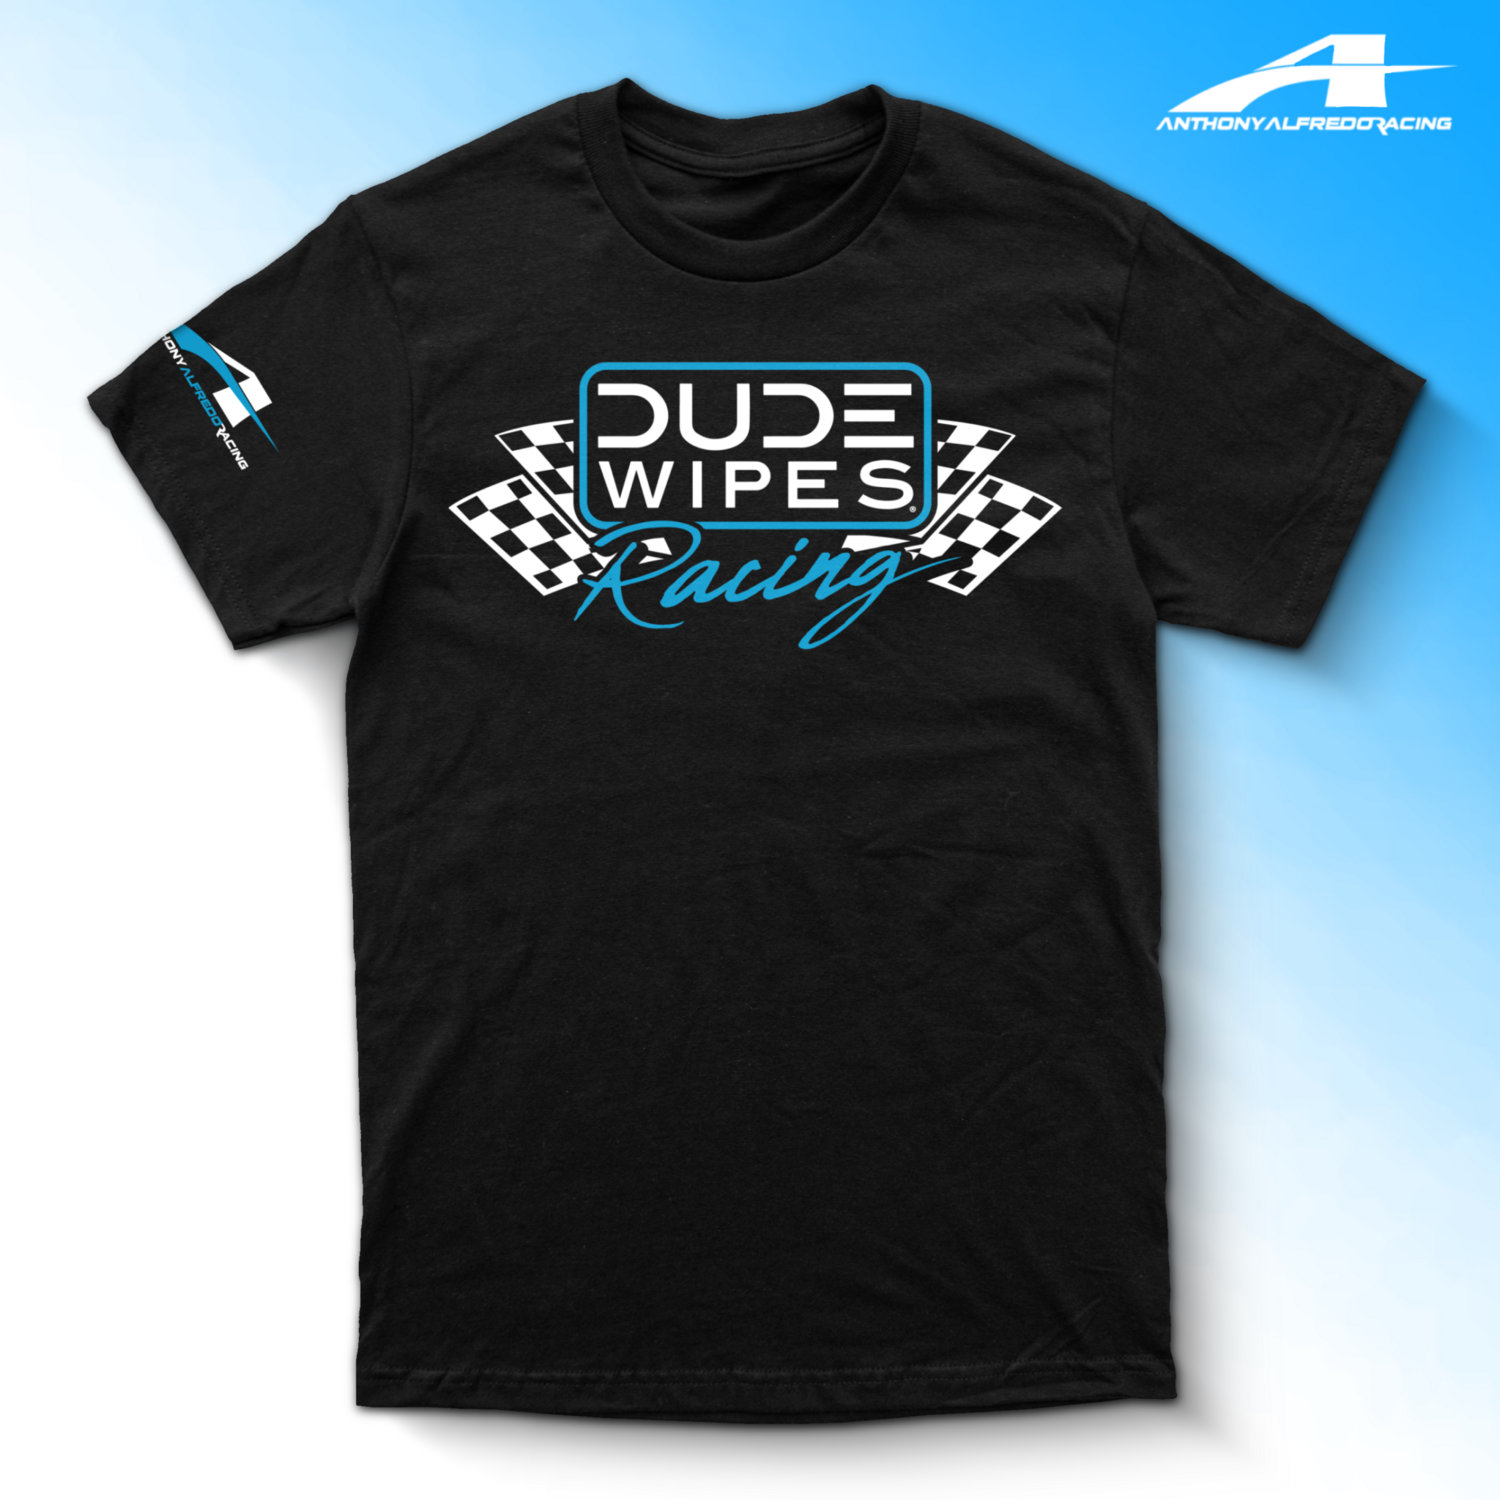 Anthony Alfredo Dude Wipes Racing T-Shirt